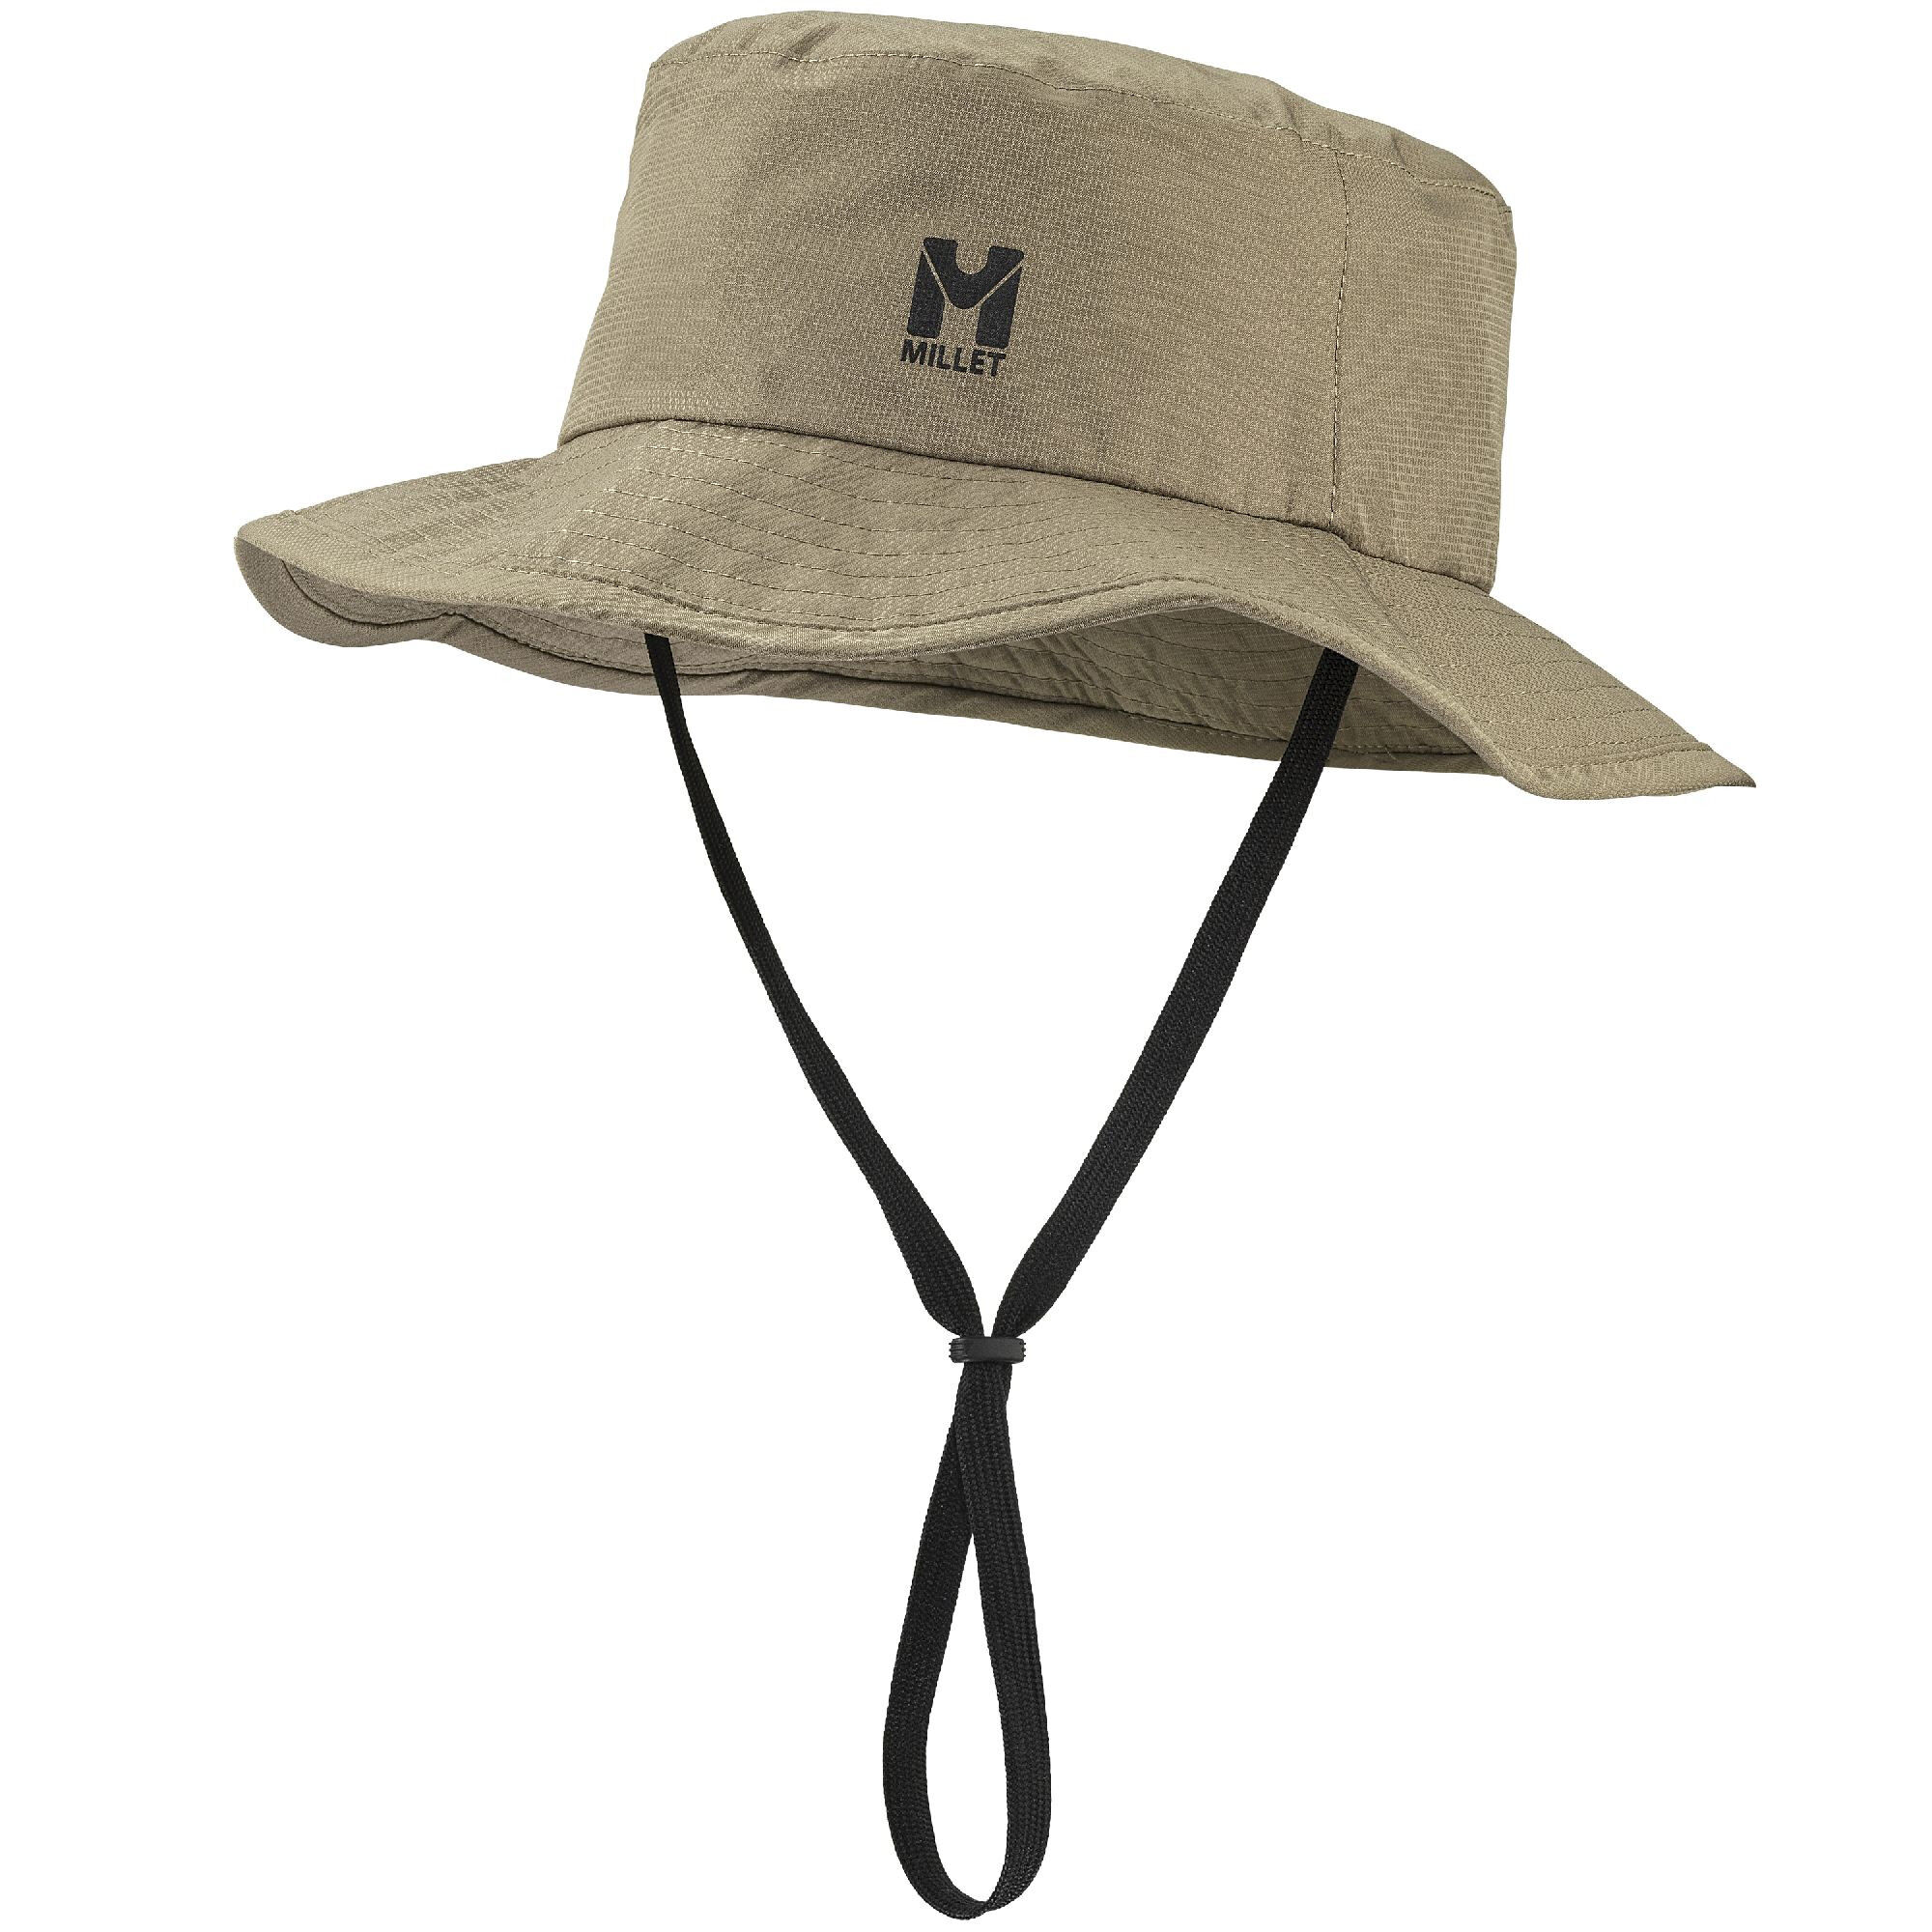 Millet Rainproof Hat - Hut